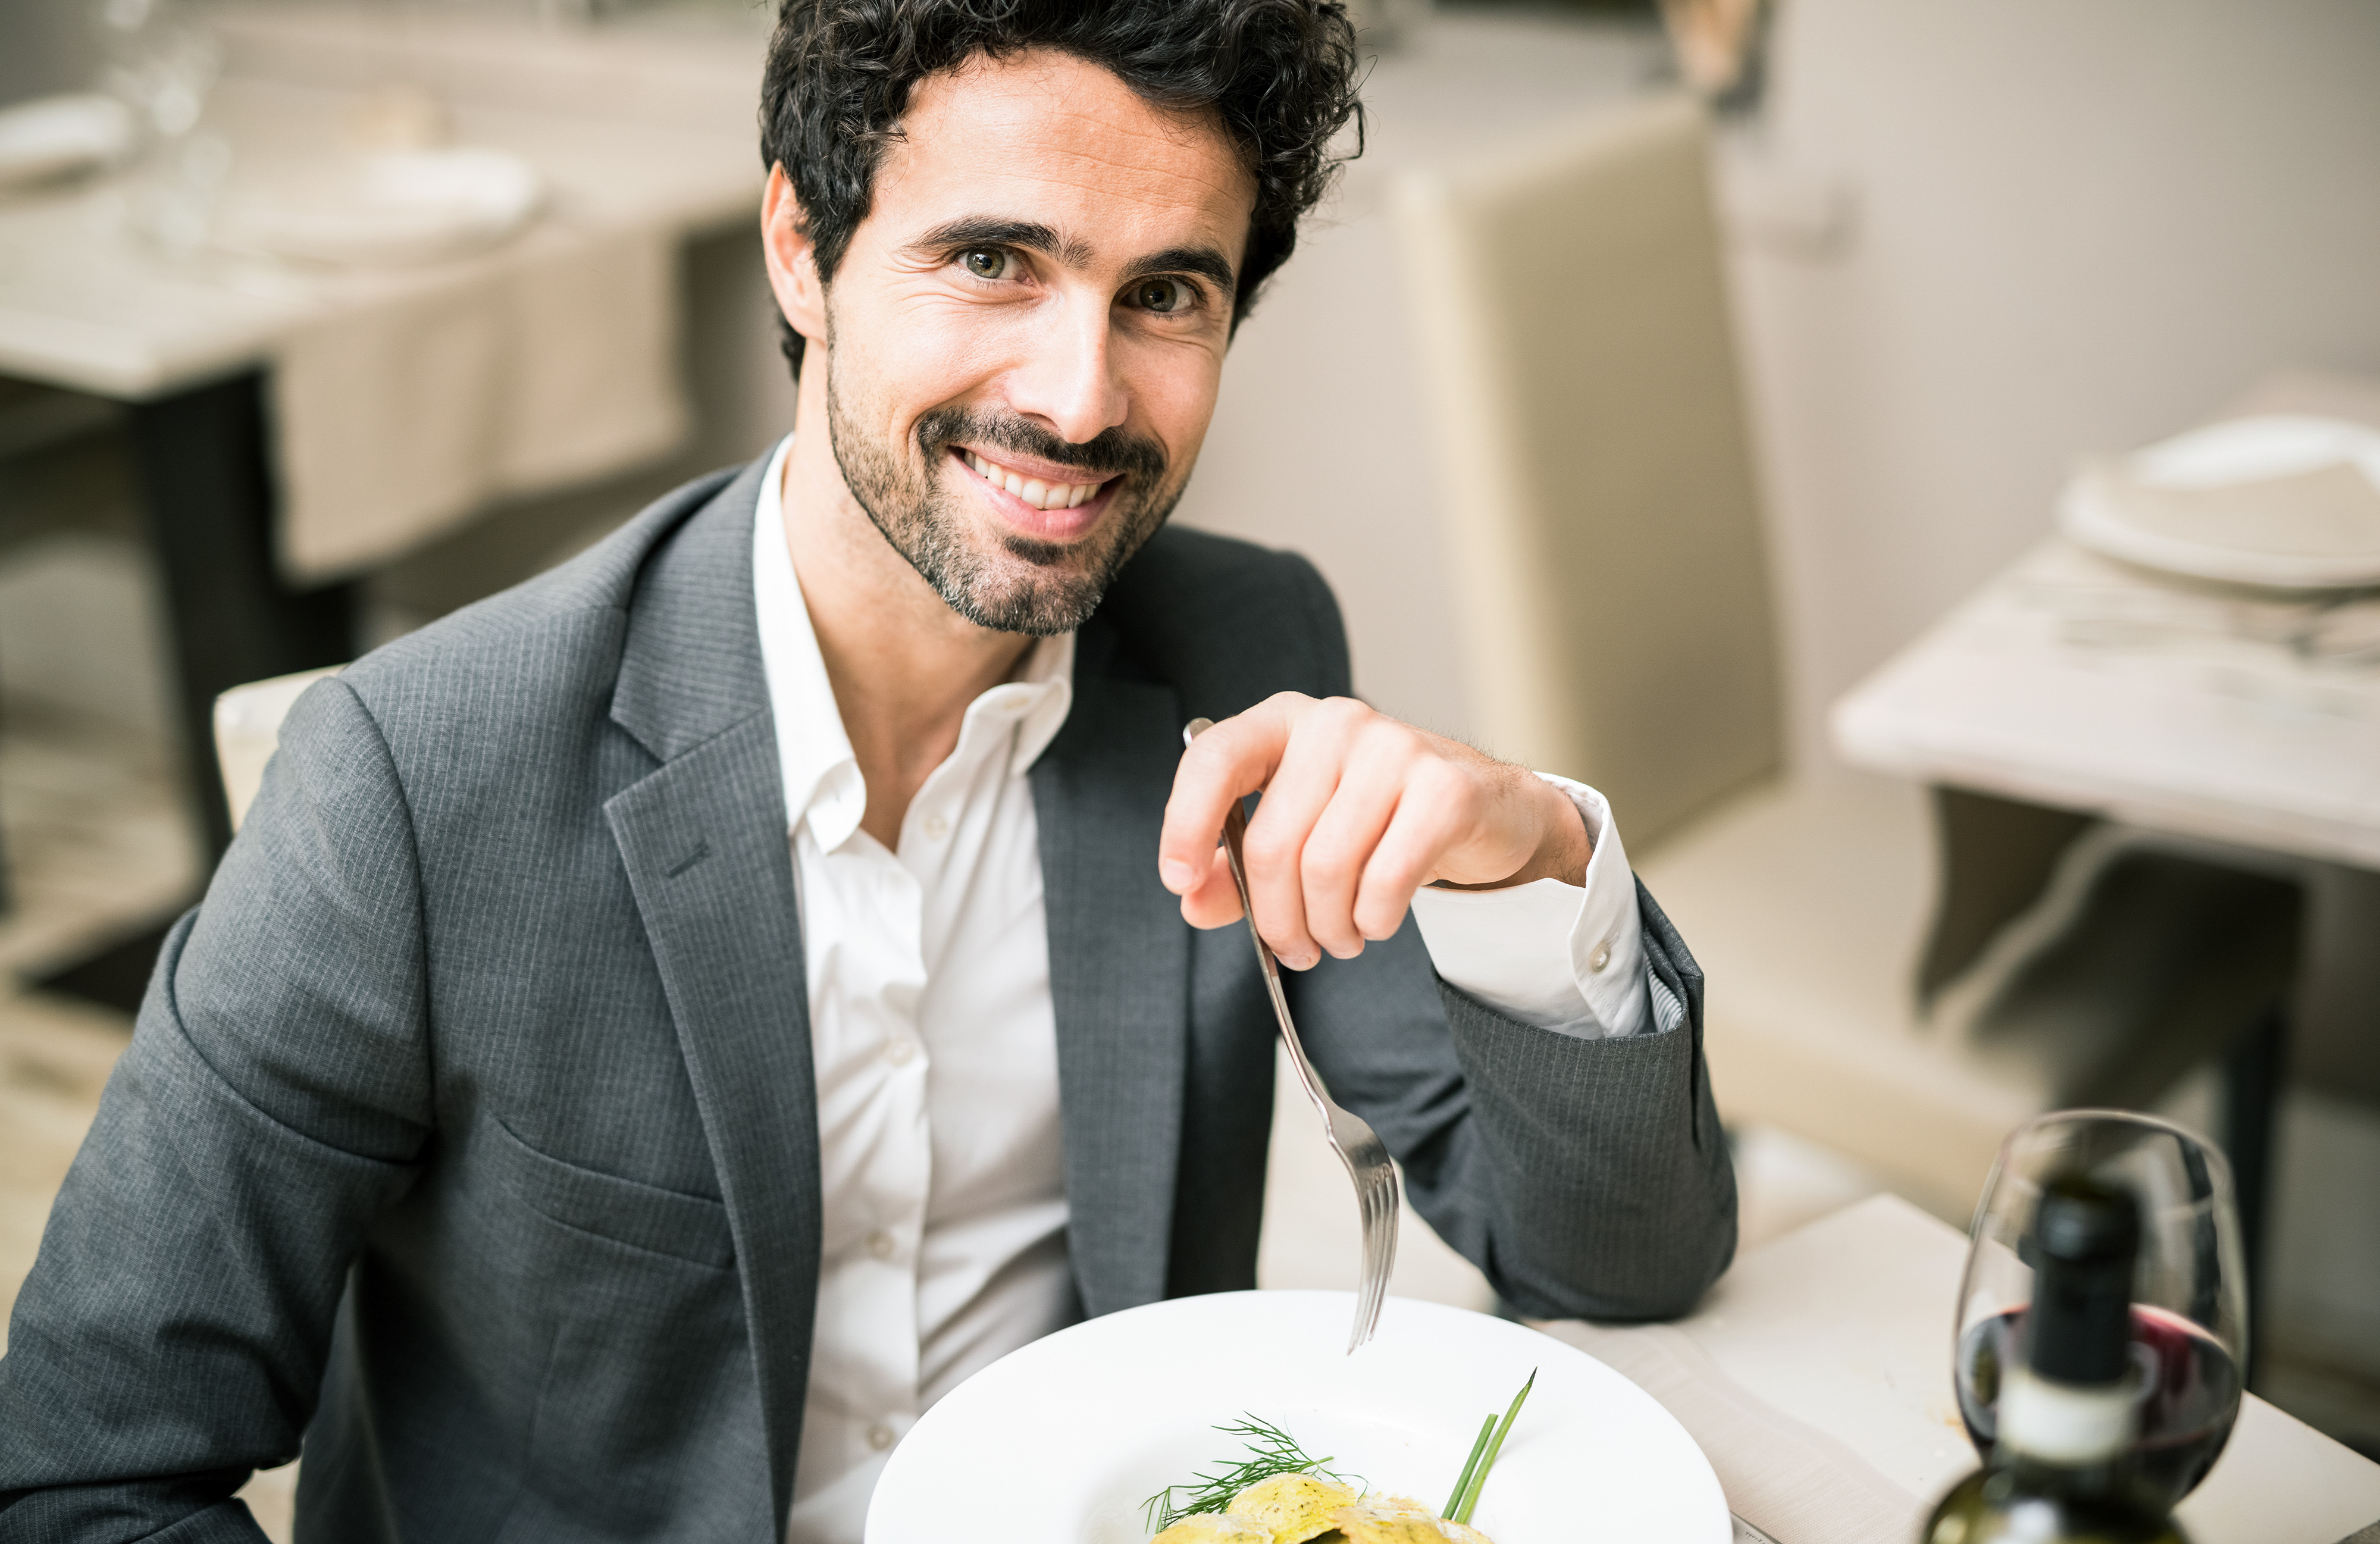 Man having lunch in a restaurant | Source: Shutterstock.com